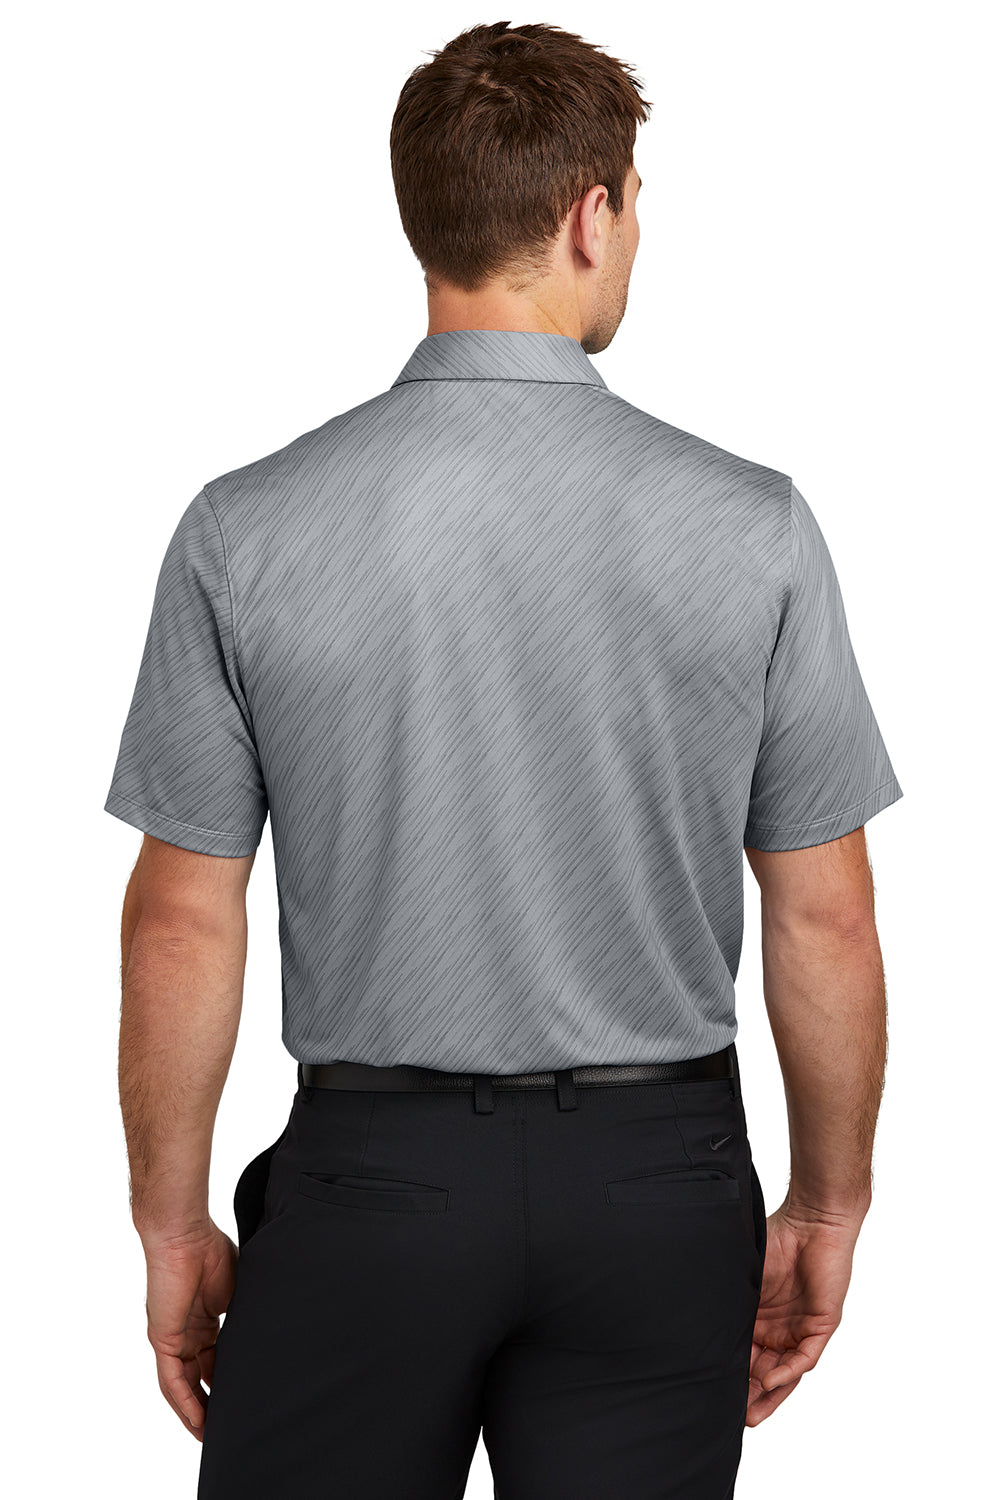 Nike NKDX6688 Mens Vapor Dash Dri-Fit Moisture Wicking Short Sleeve Polo Shirt Cool Grey Model Back